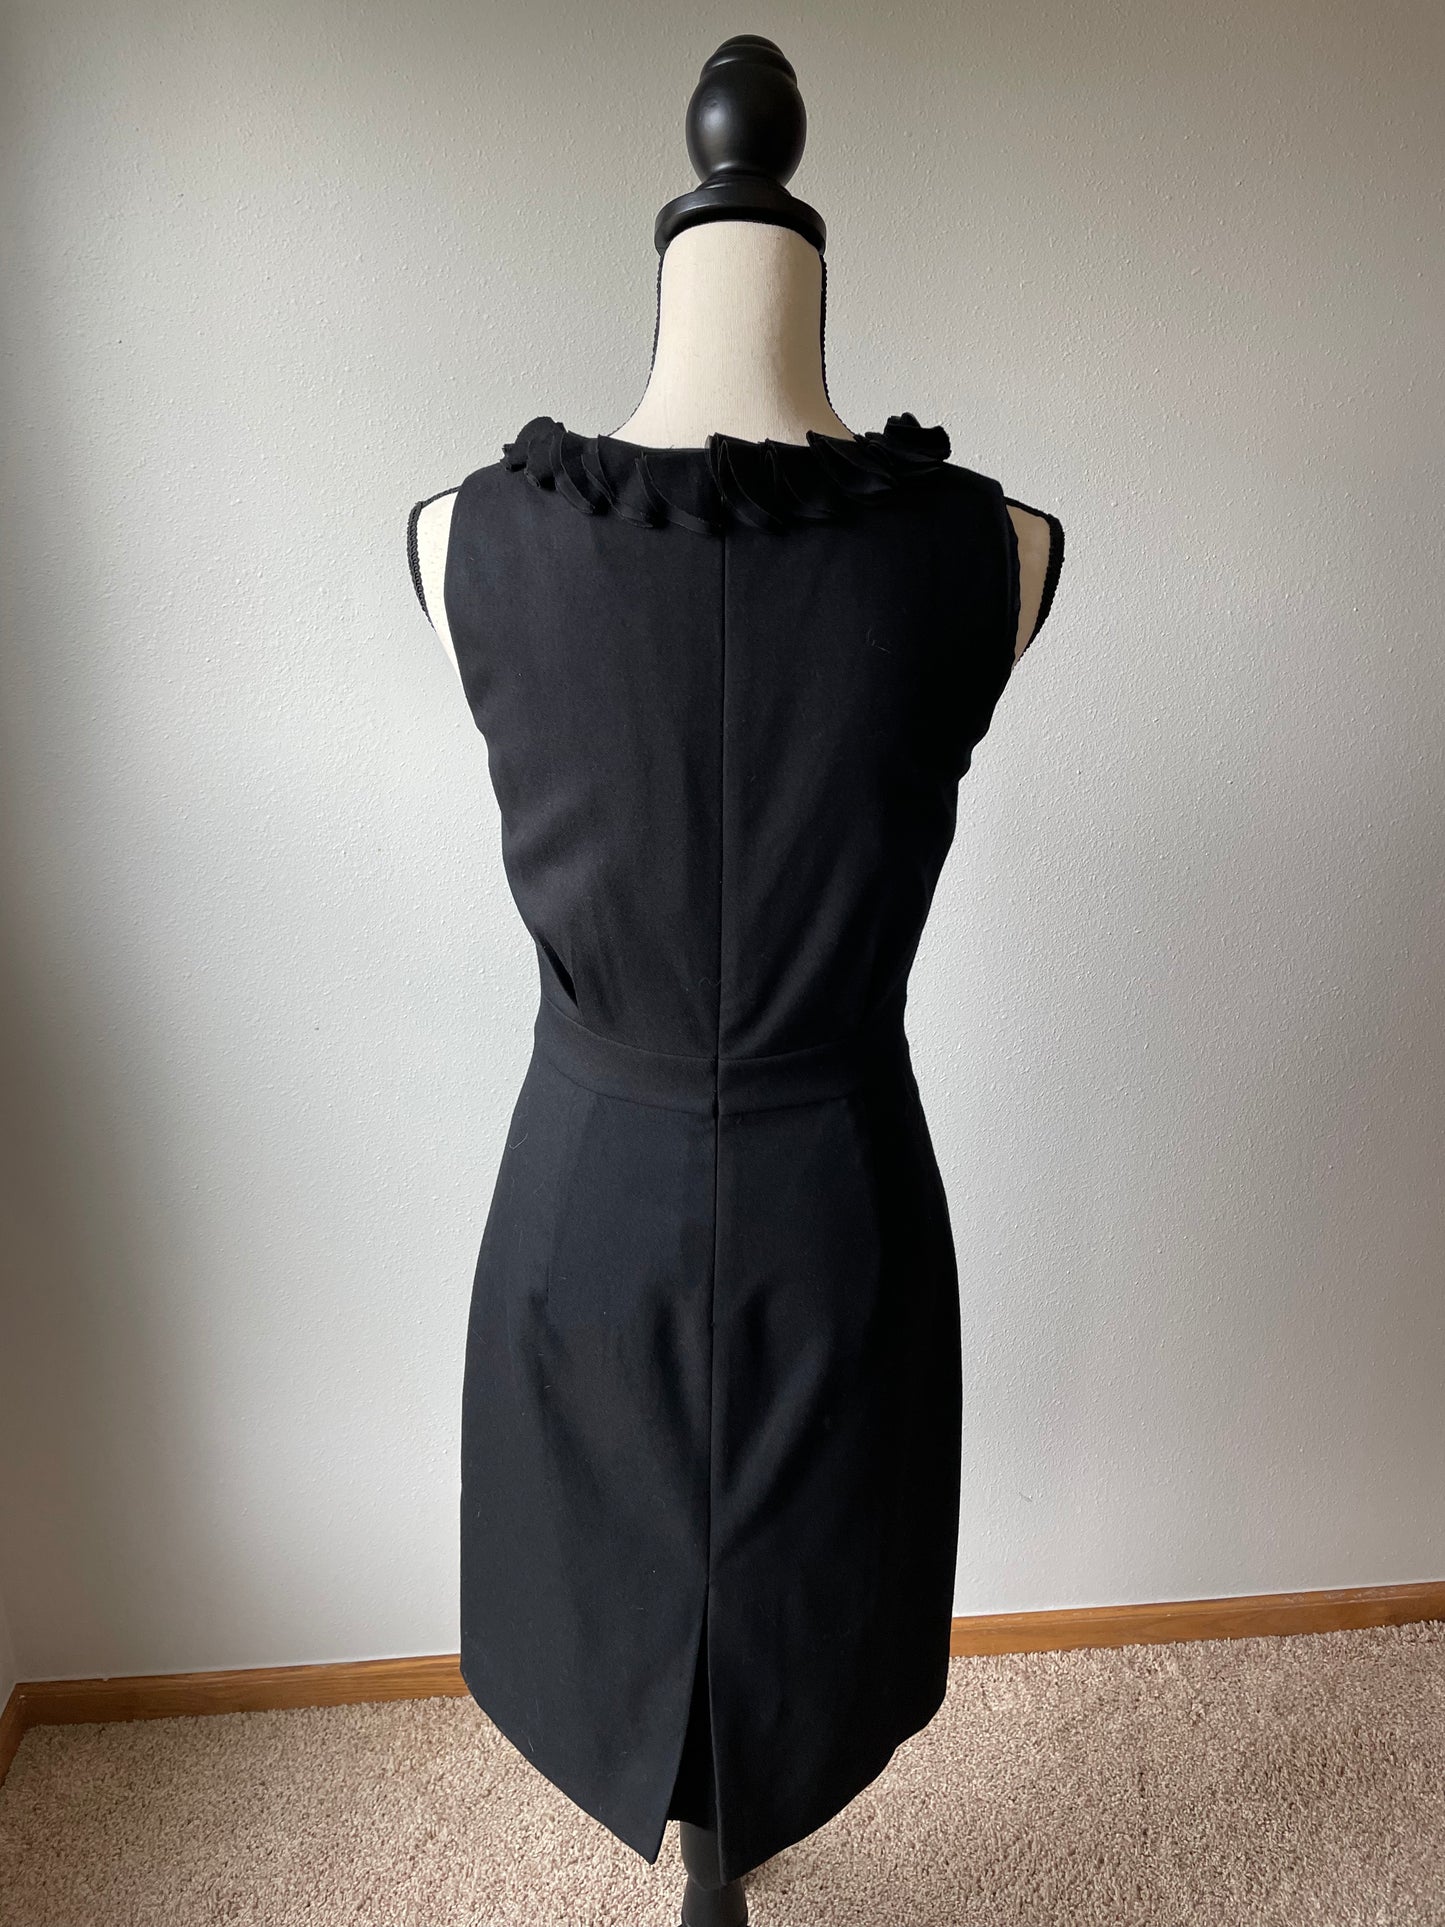 J. Crew Suiting Black Dress (4)